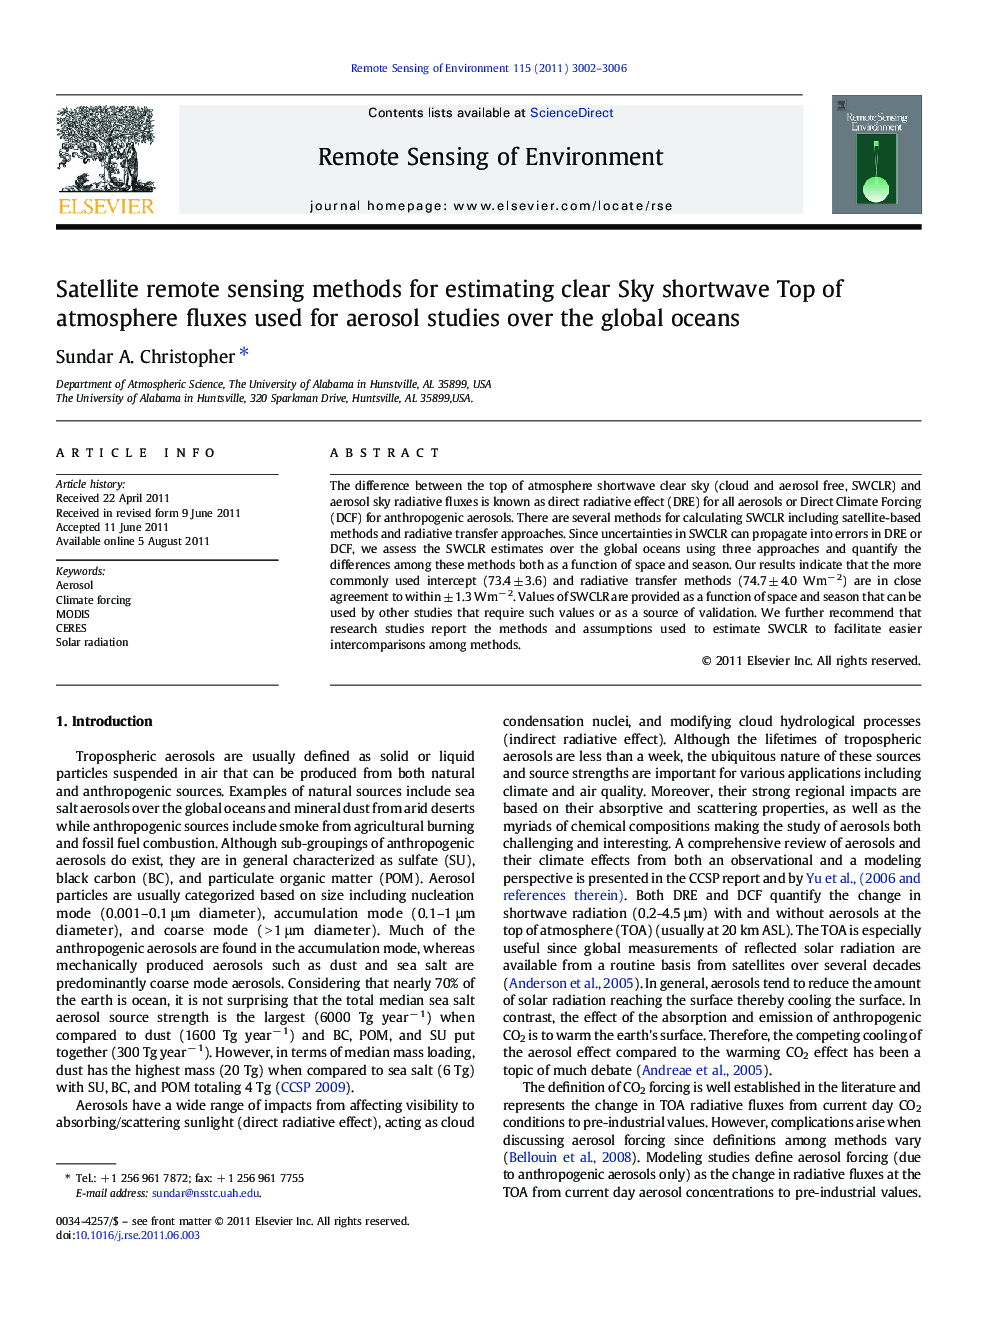 Satellite remote sensing methods for estimating clear Sky shortwave Top of atmosphere fluxes used for aerosol studies over the global oceans